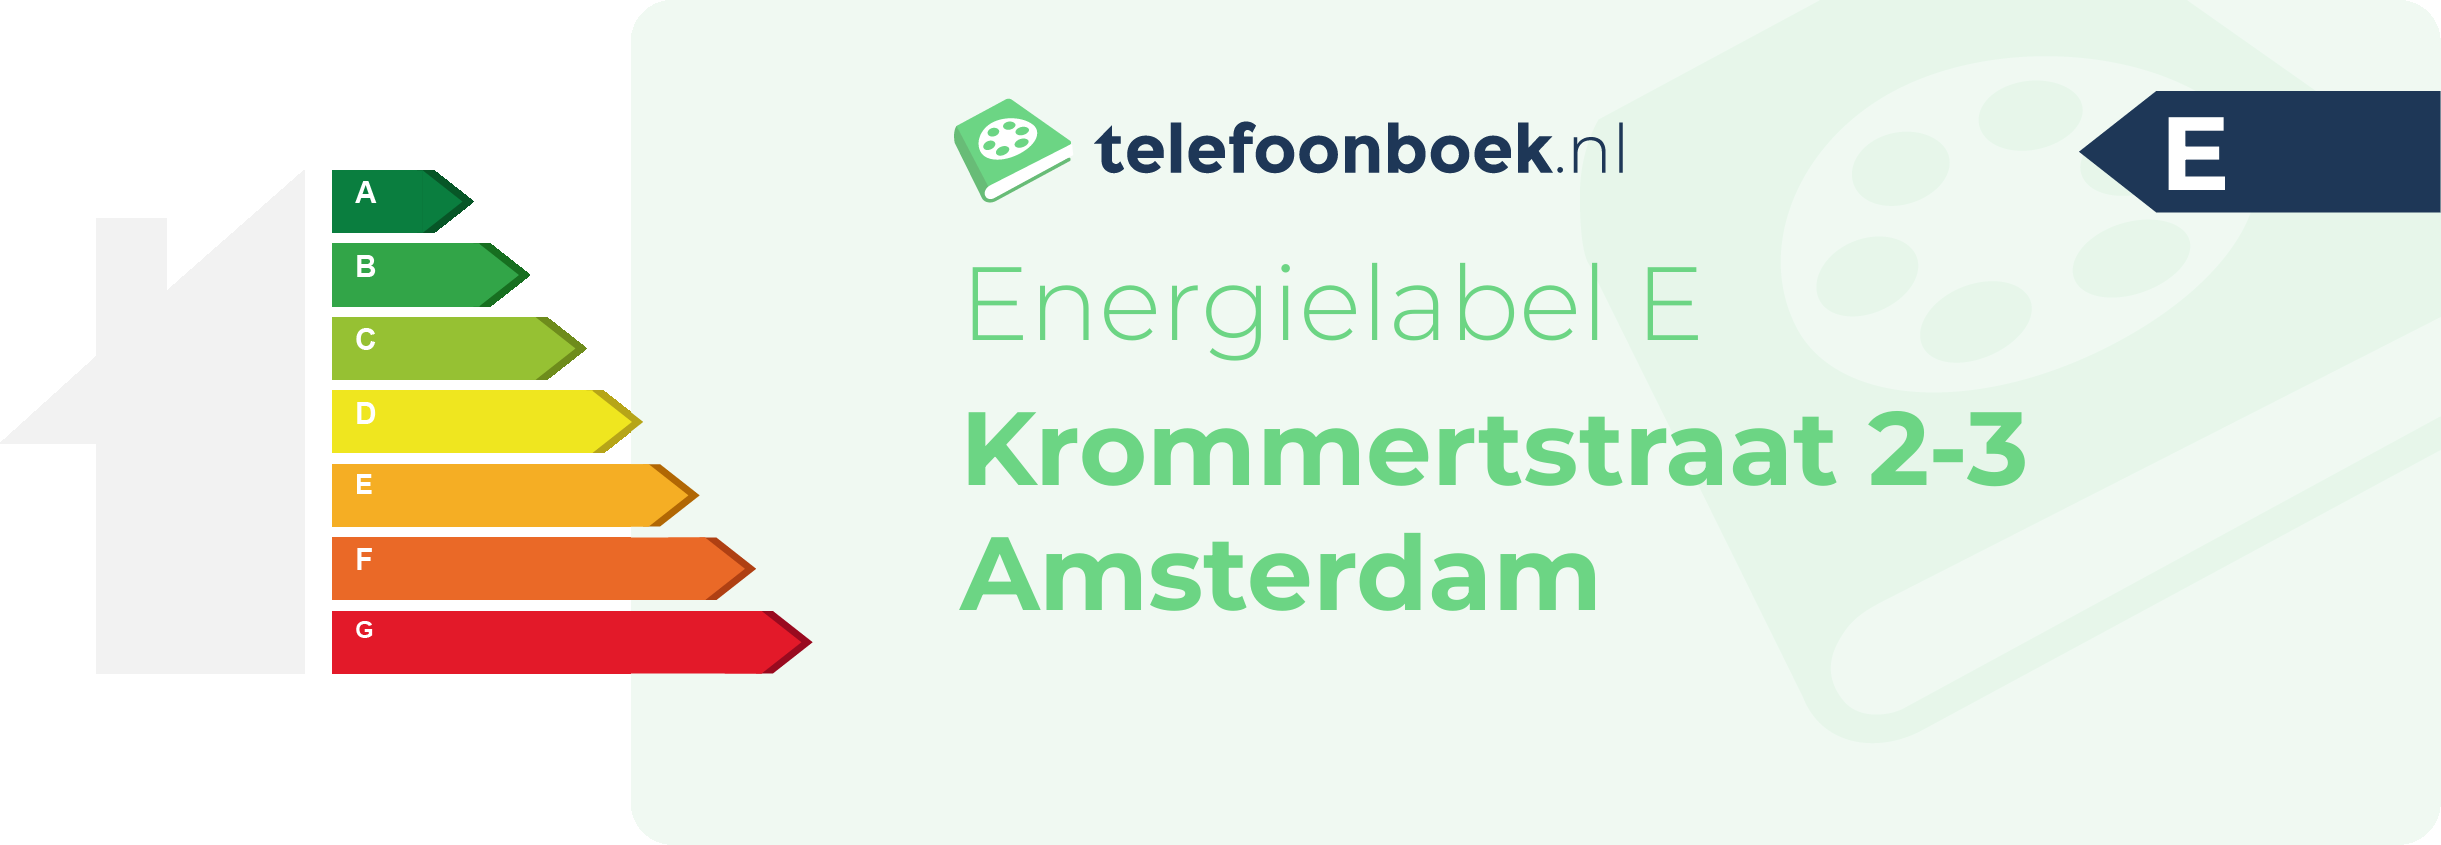 Energielabel Krommertstraat 2-3 Amsterdam